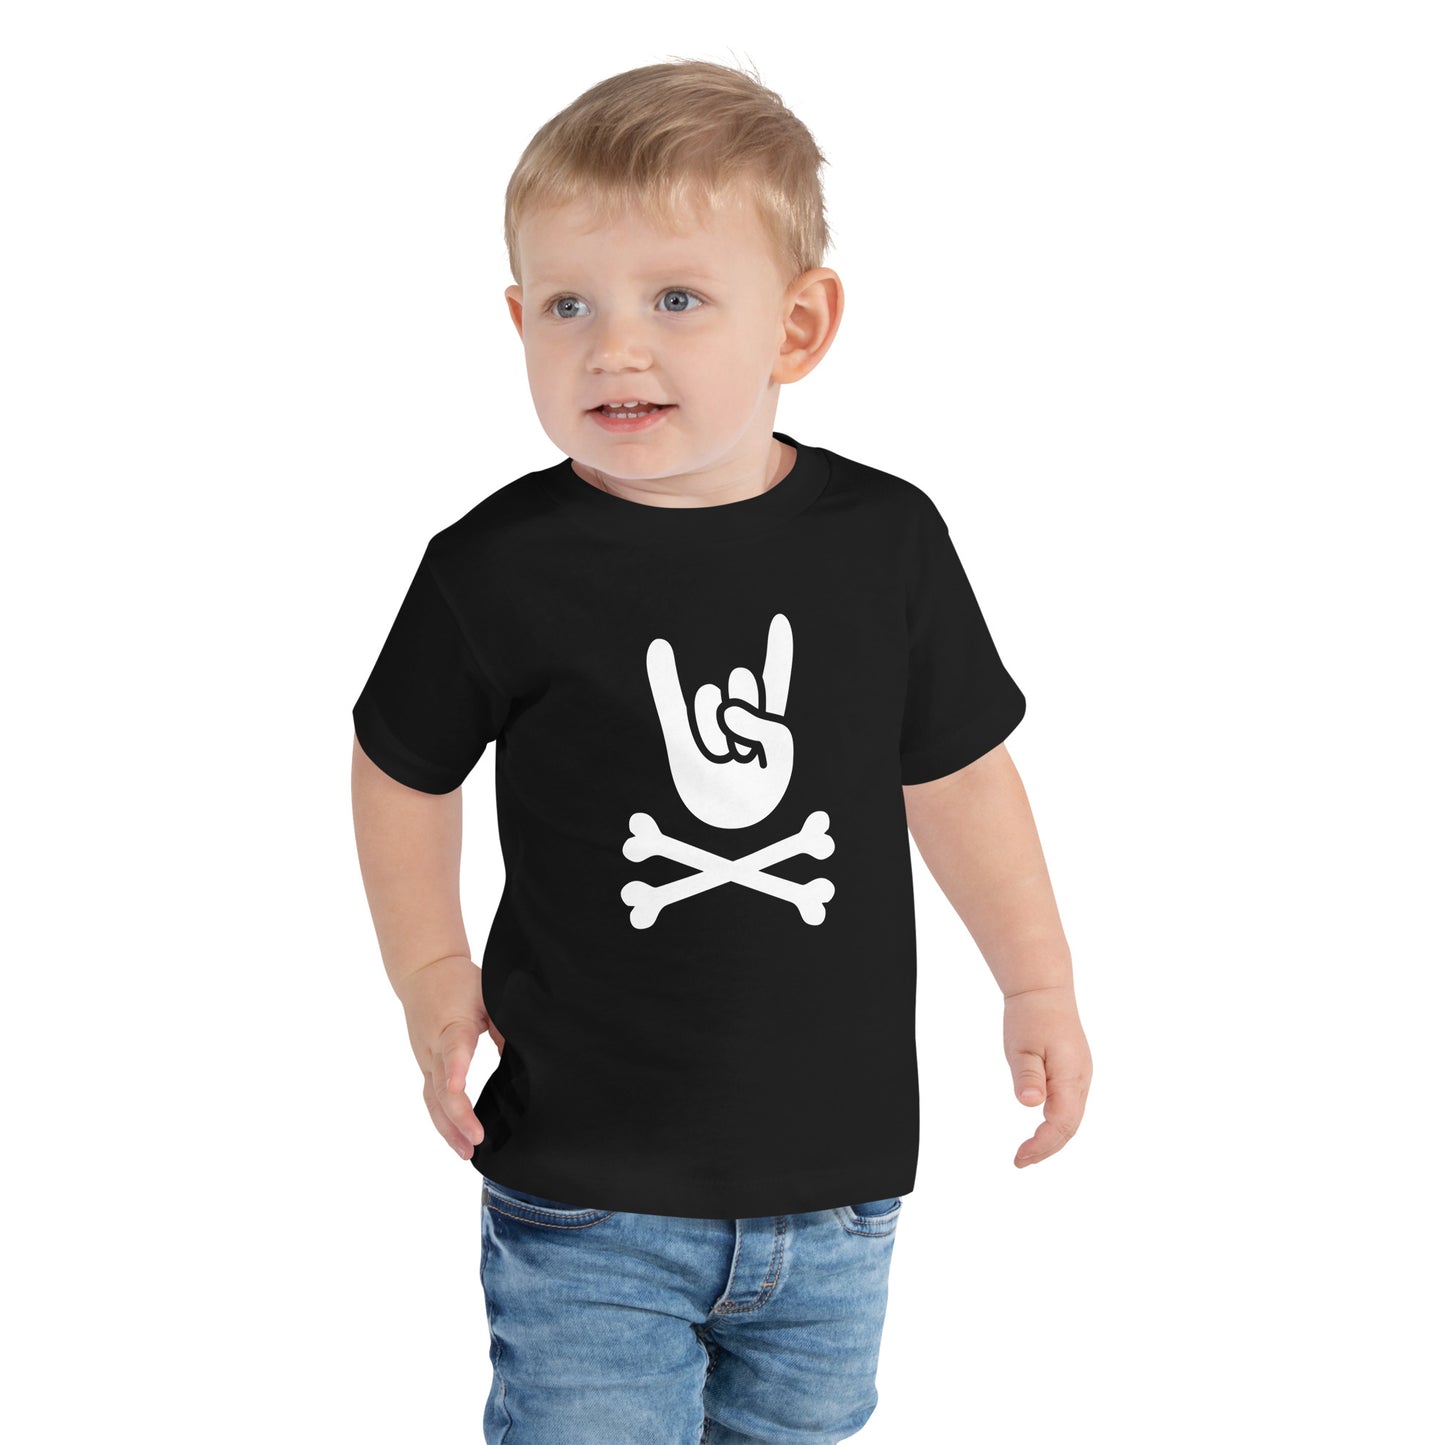 Big hand to ROCKNROLL Toddler Short Sleeve Black T-Shirt